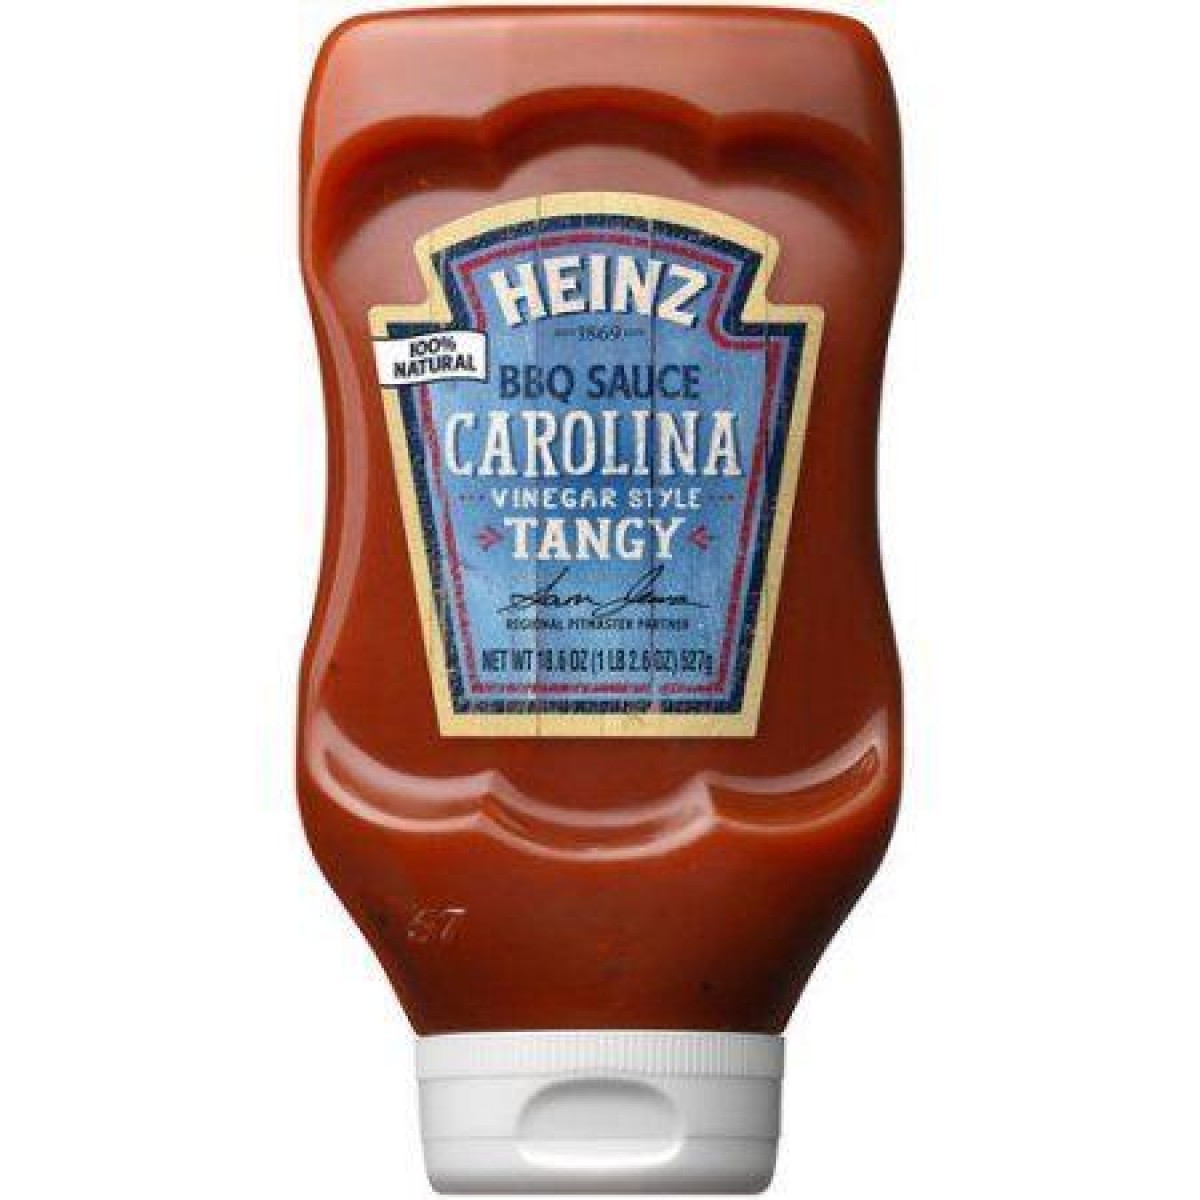 Heinz Bbq Sauces
 Heinz Carolina Tangy BBQ Sauce 527g 18 6oz